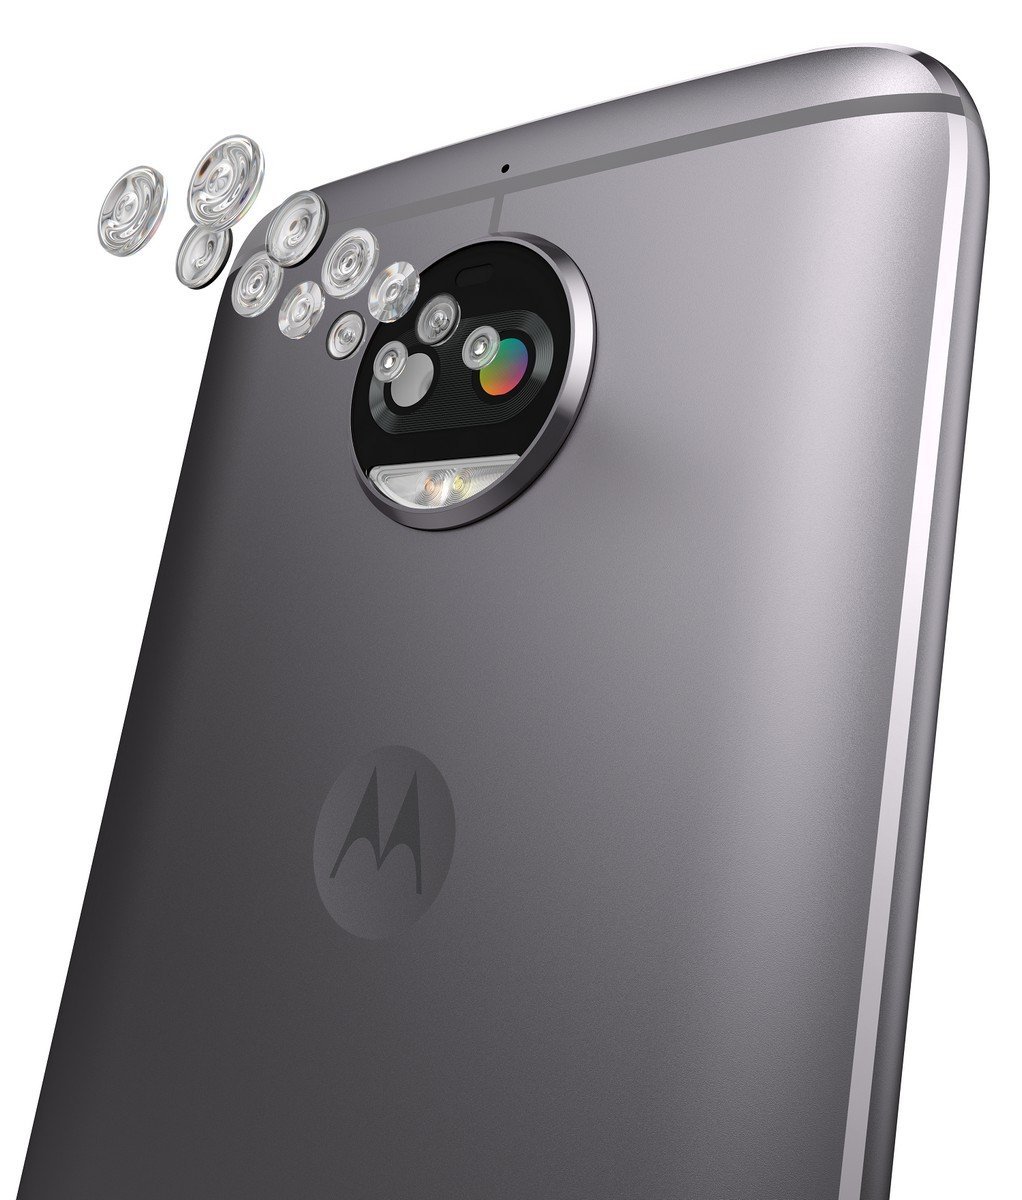 Motorola Moto G5s Plus Image - Moto G5s Plus 64gb , HD Wallpaper & Backgrounds